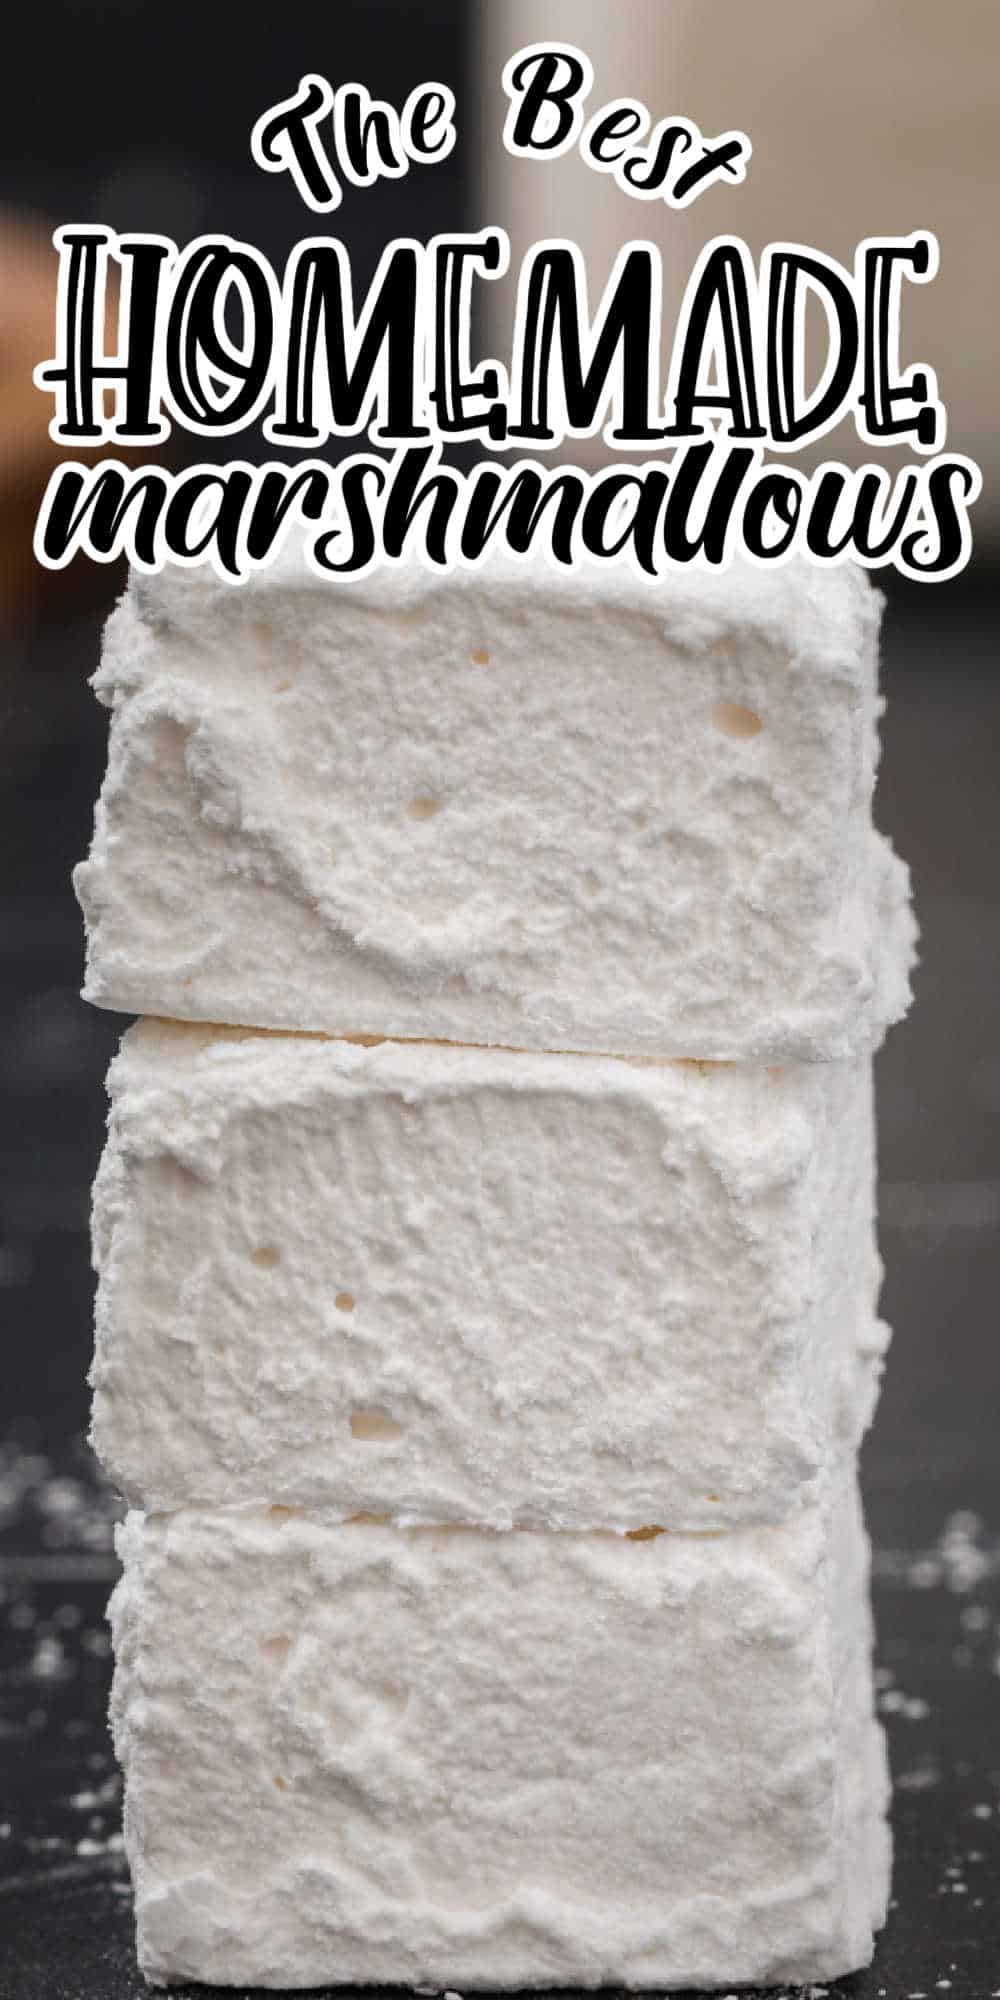 How to Make Homemade Marshmallows • MidgetMomma